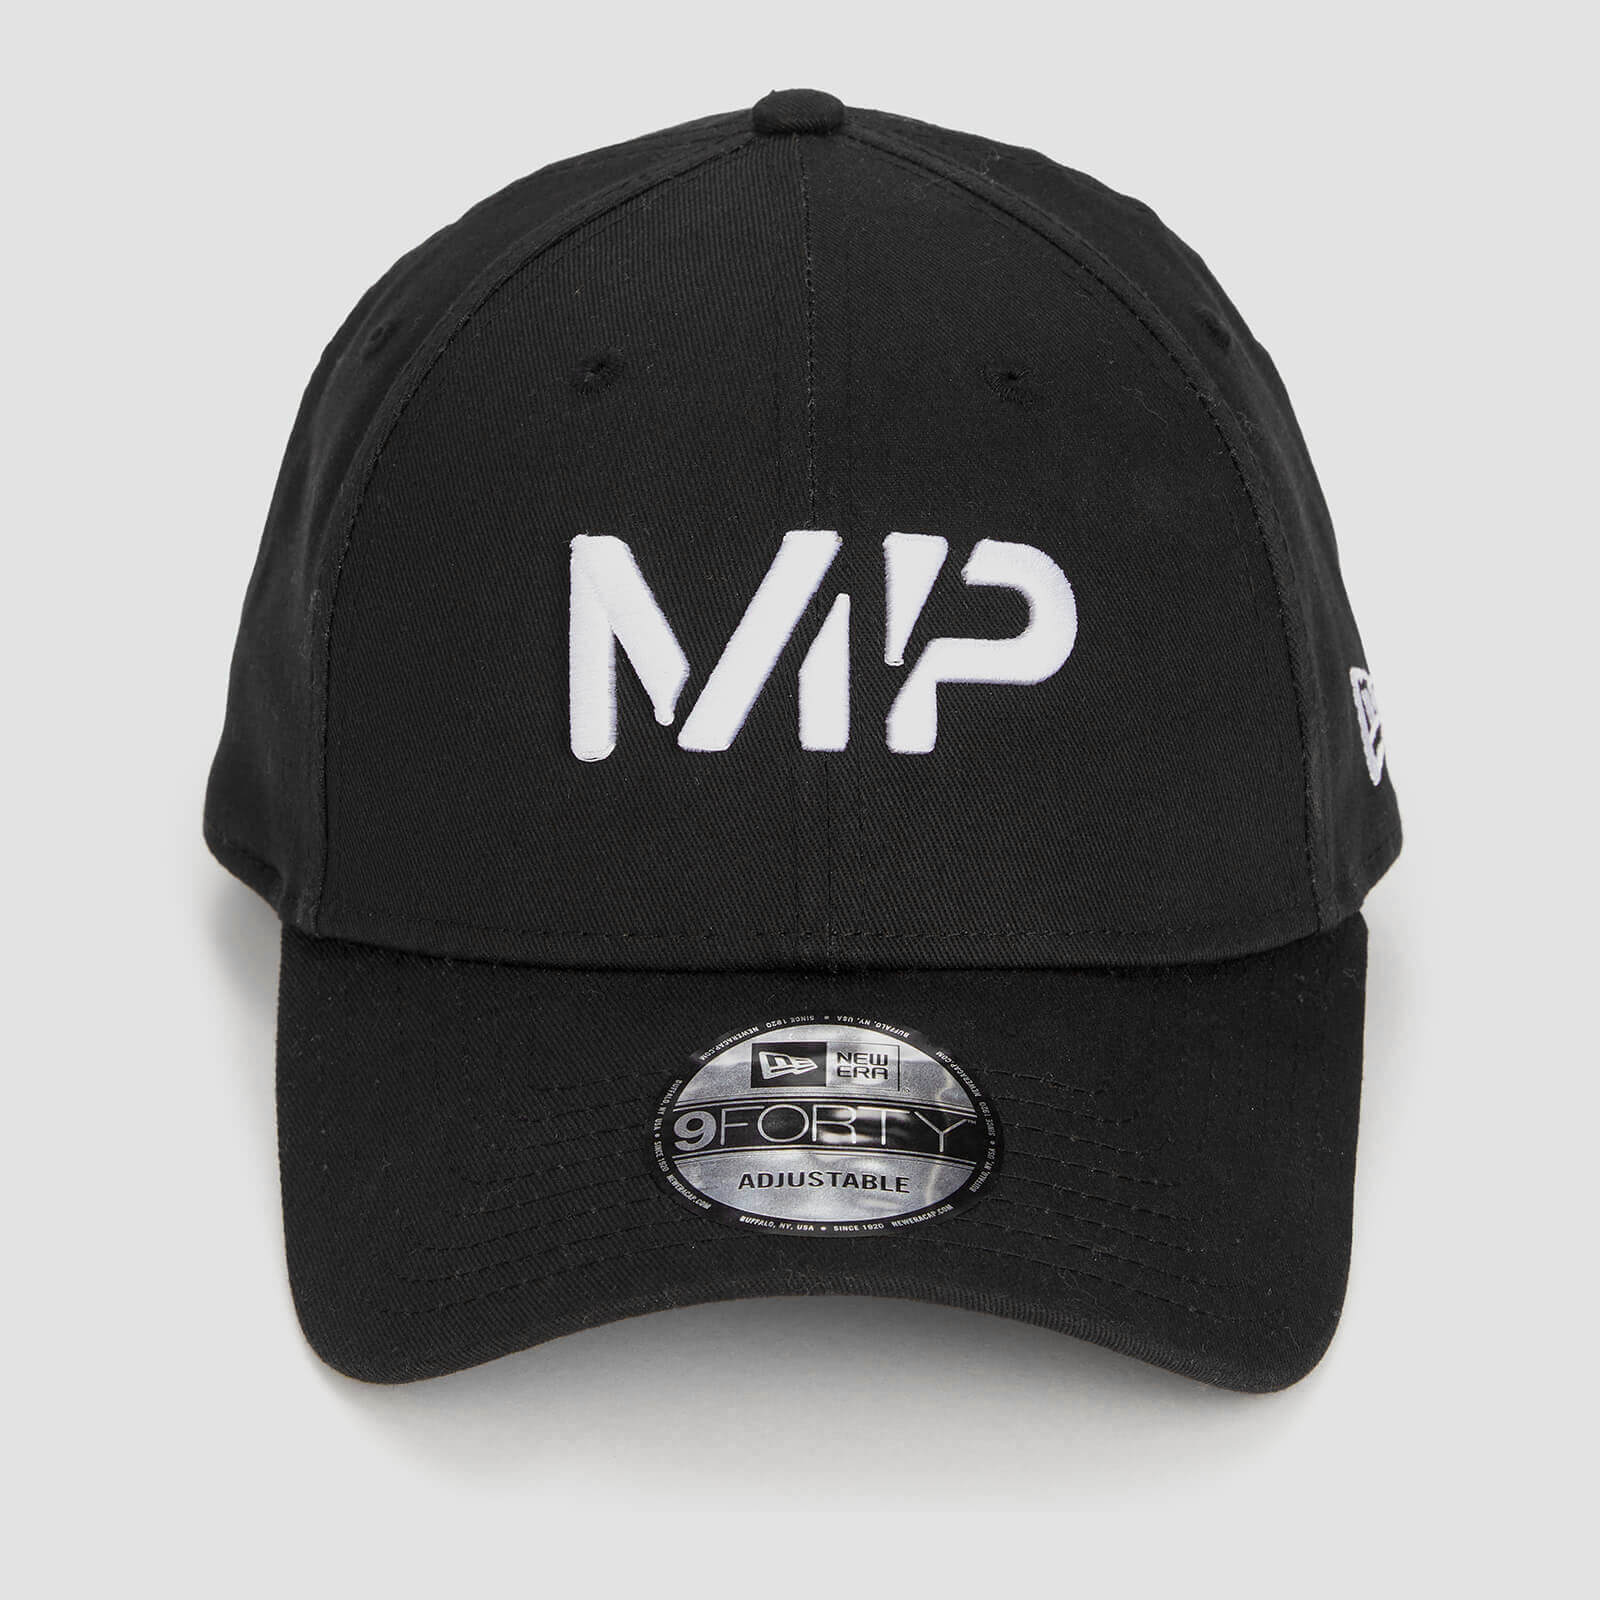 MP NEW ERA 9FORTY Baseball Cap - Black/White